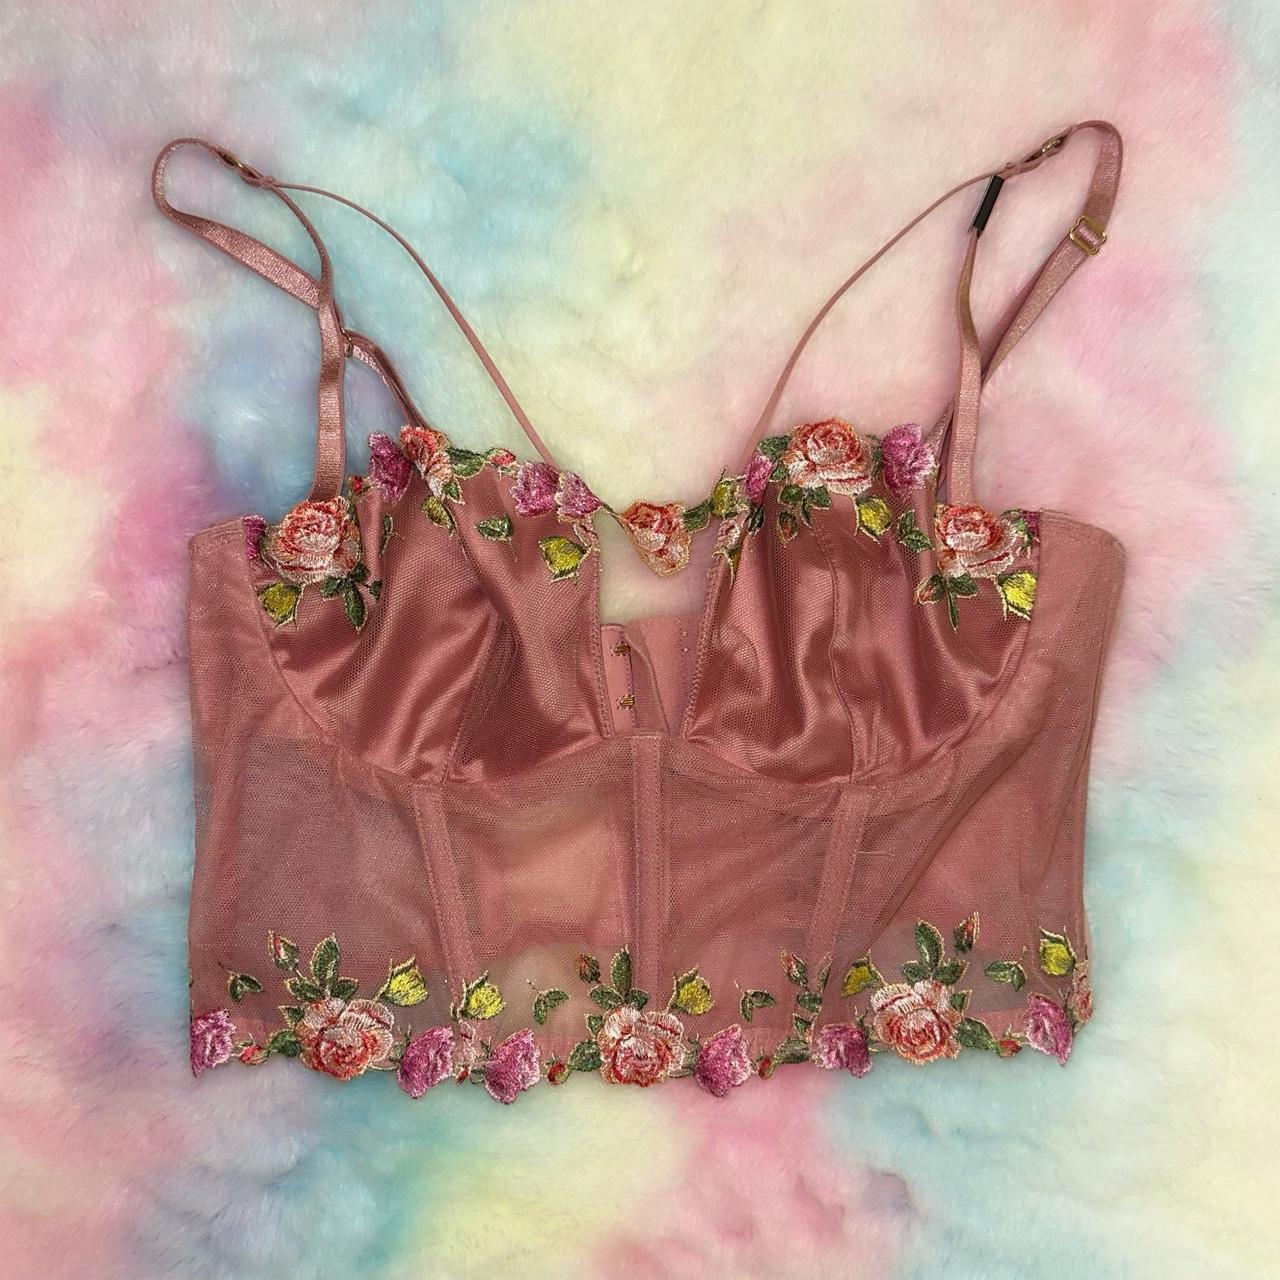 Floral Embroidery Corset Top - Bras - Victoria's Secret